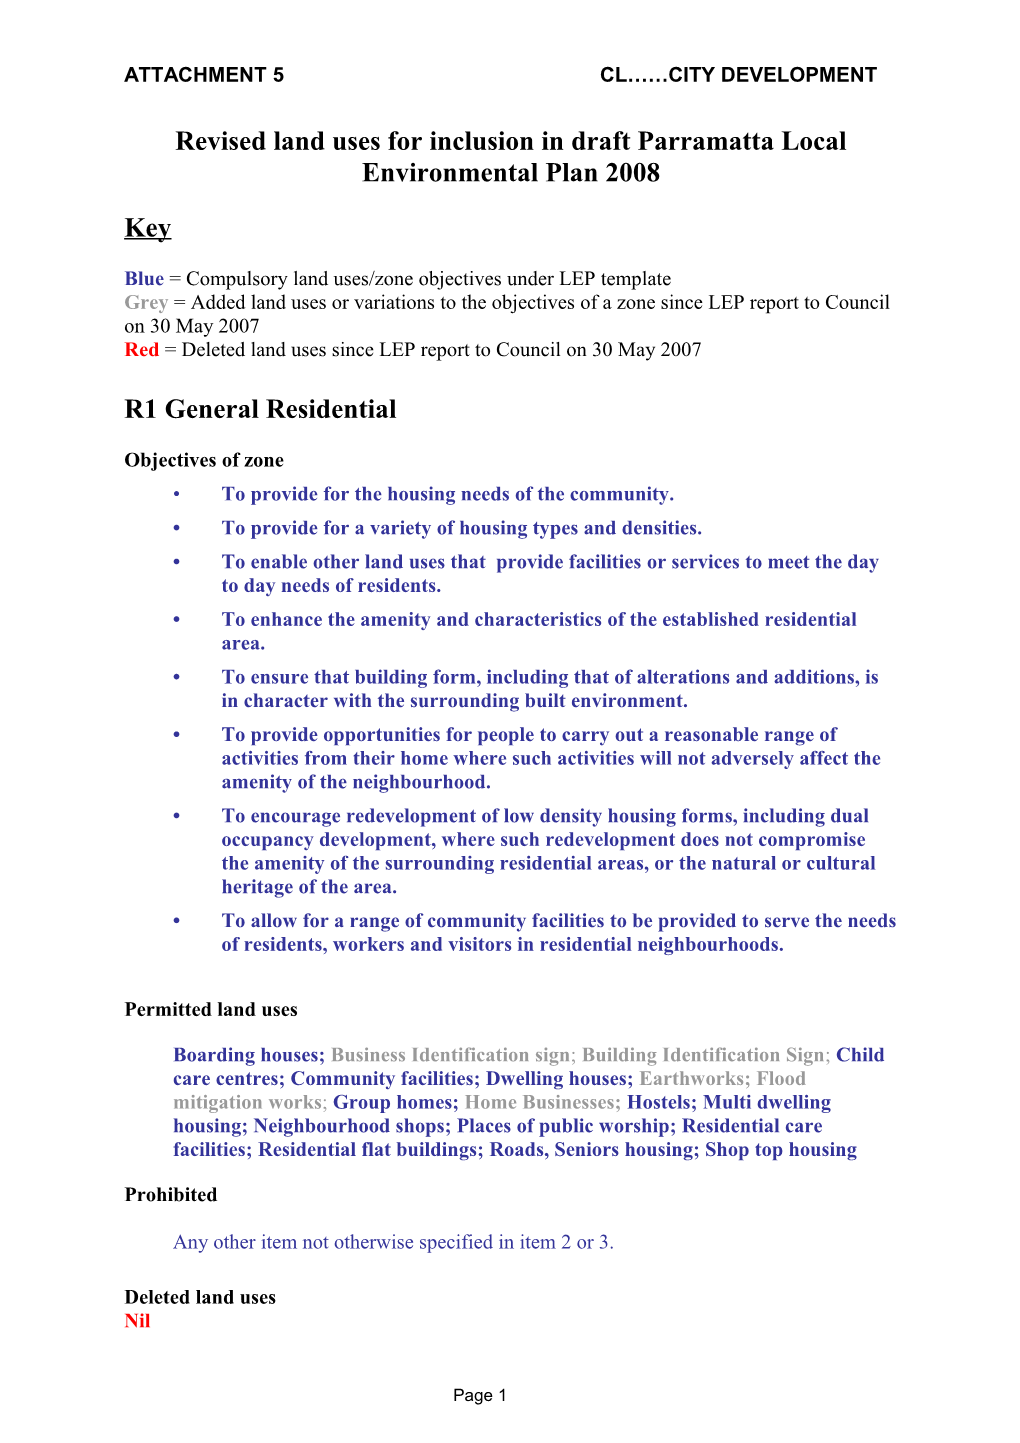 Land Use Issues Regarding Draft Parramatta Local Environmental Plan 2001 (Version 1 As